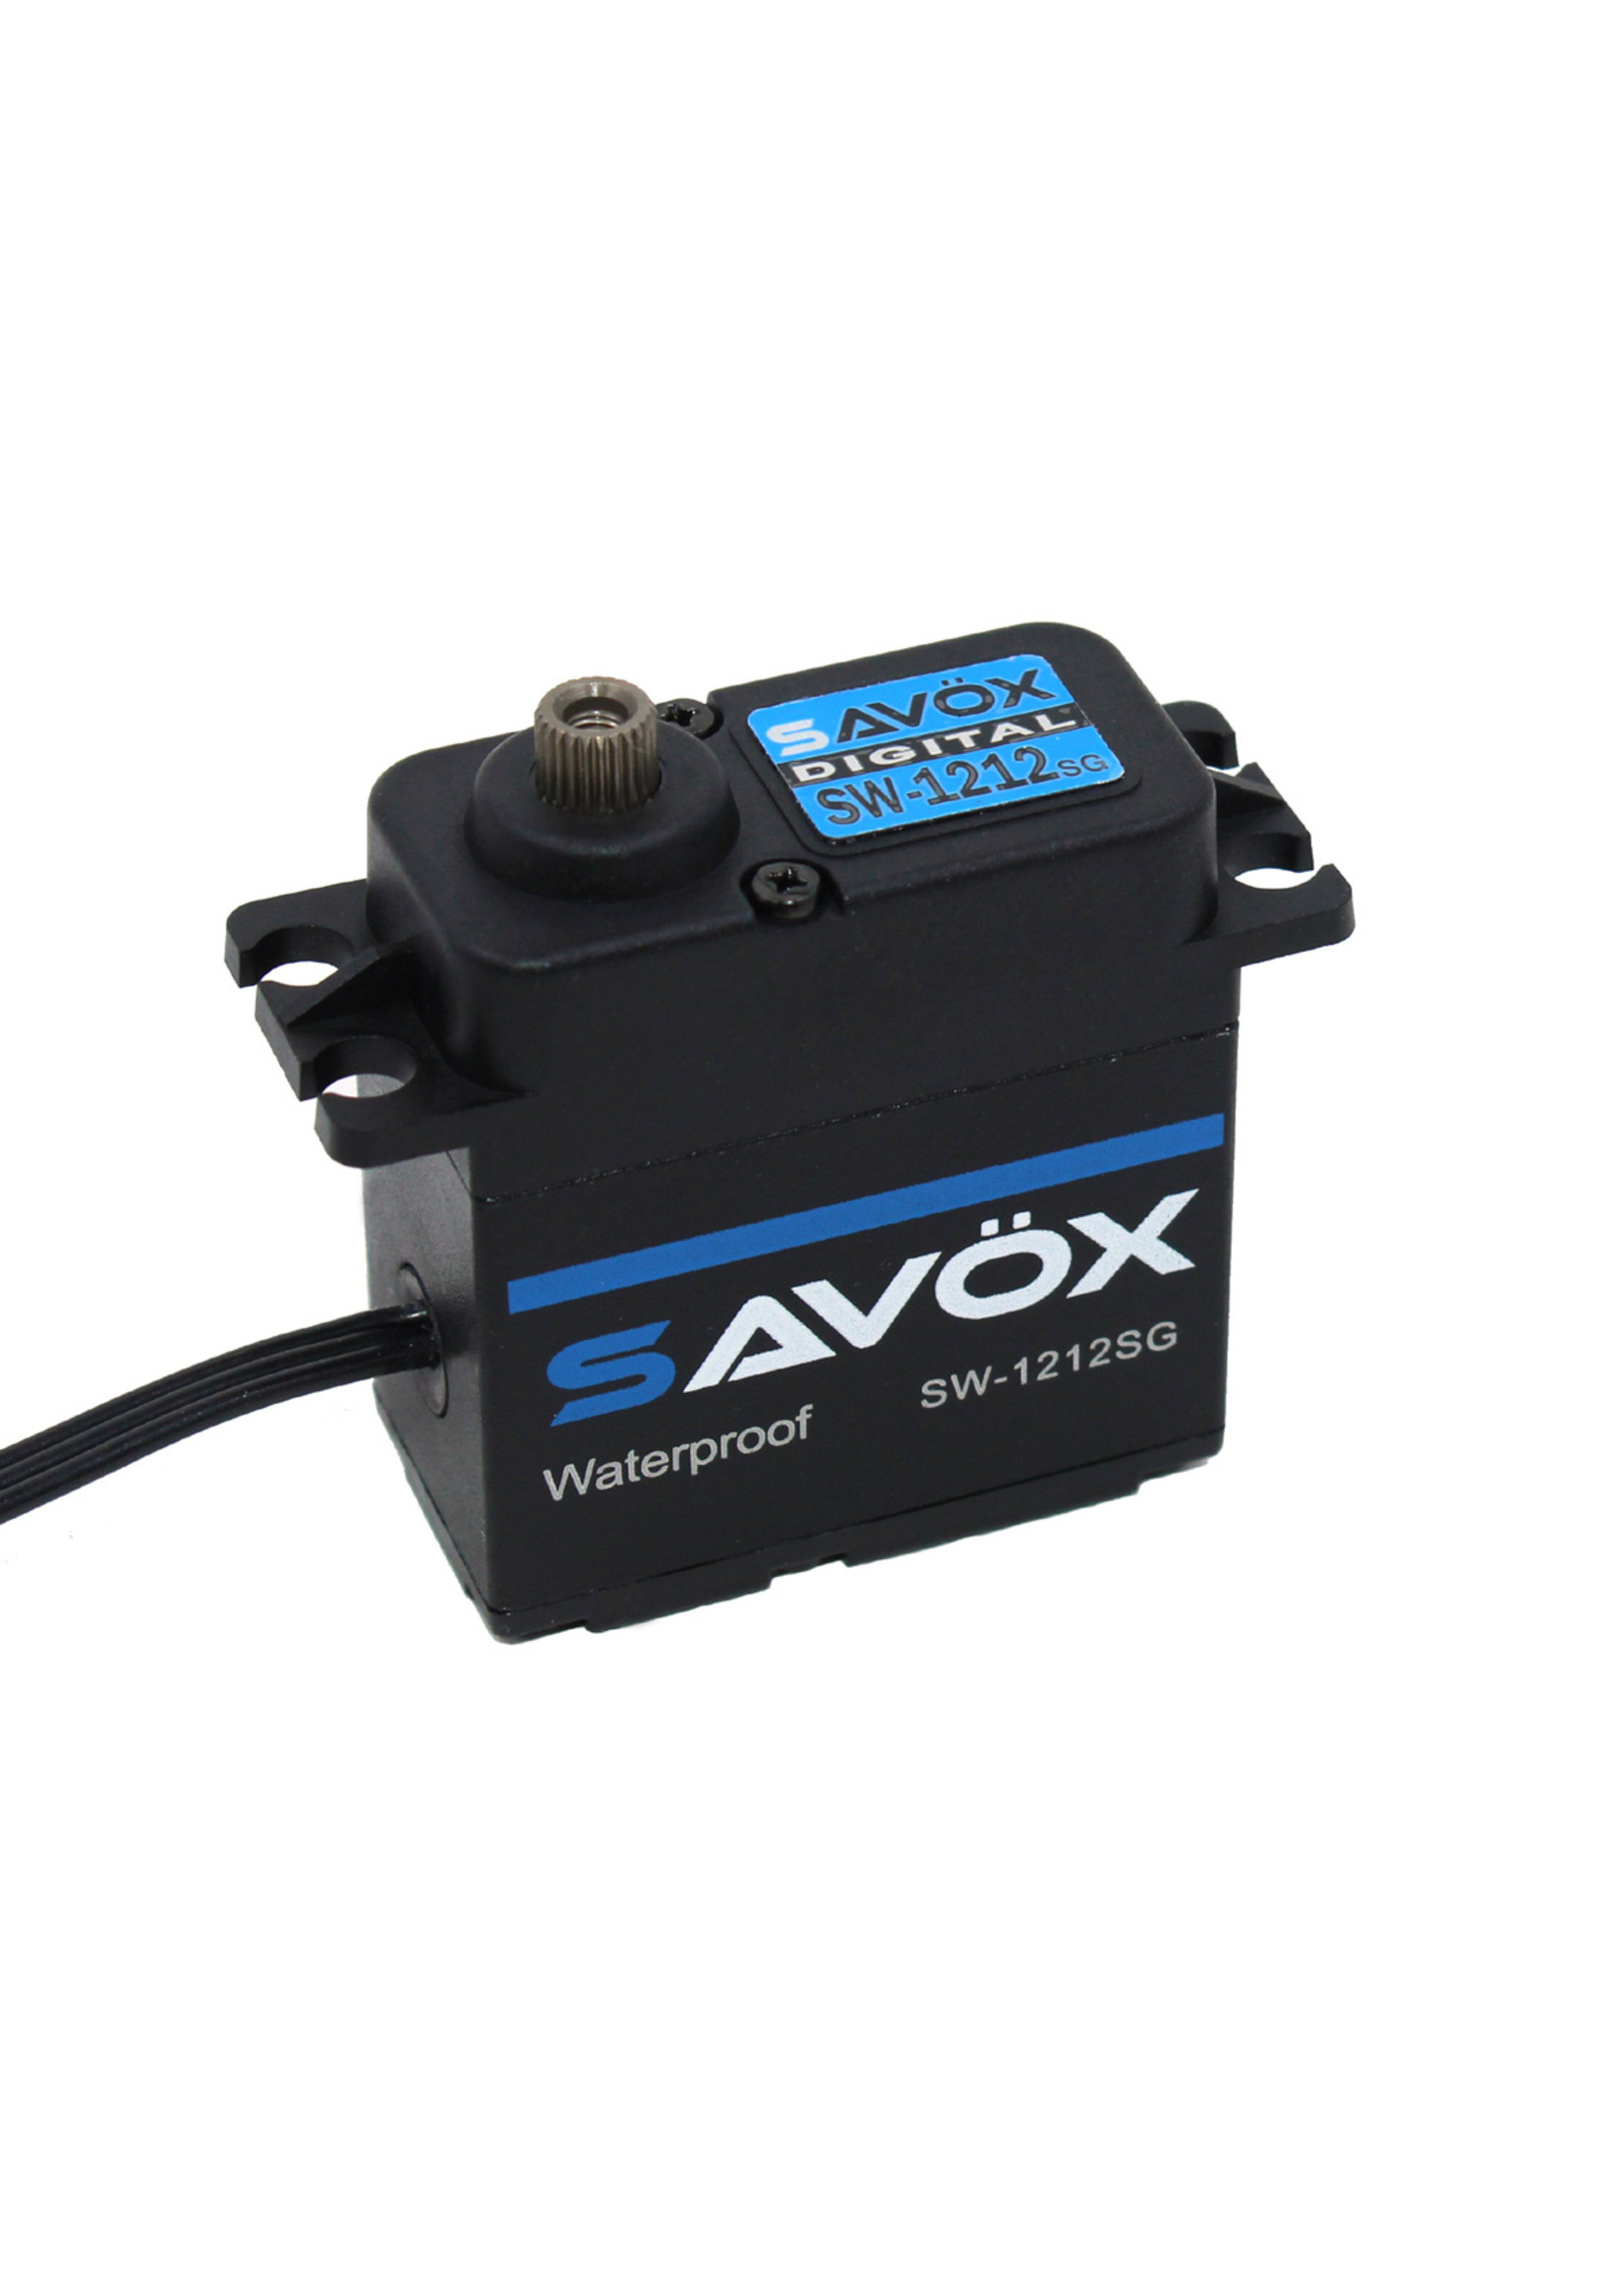 Savox SAVSW1212SGBE - Black Edition Waterproof High Voltage Digital Servo